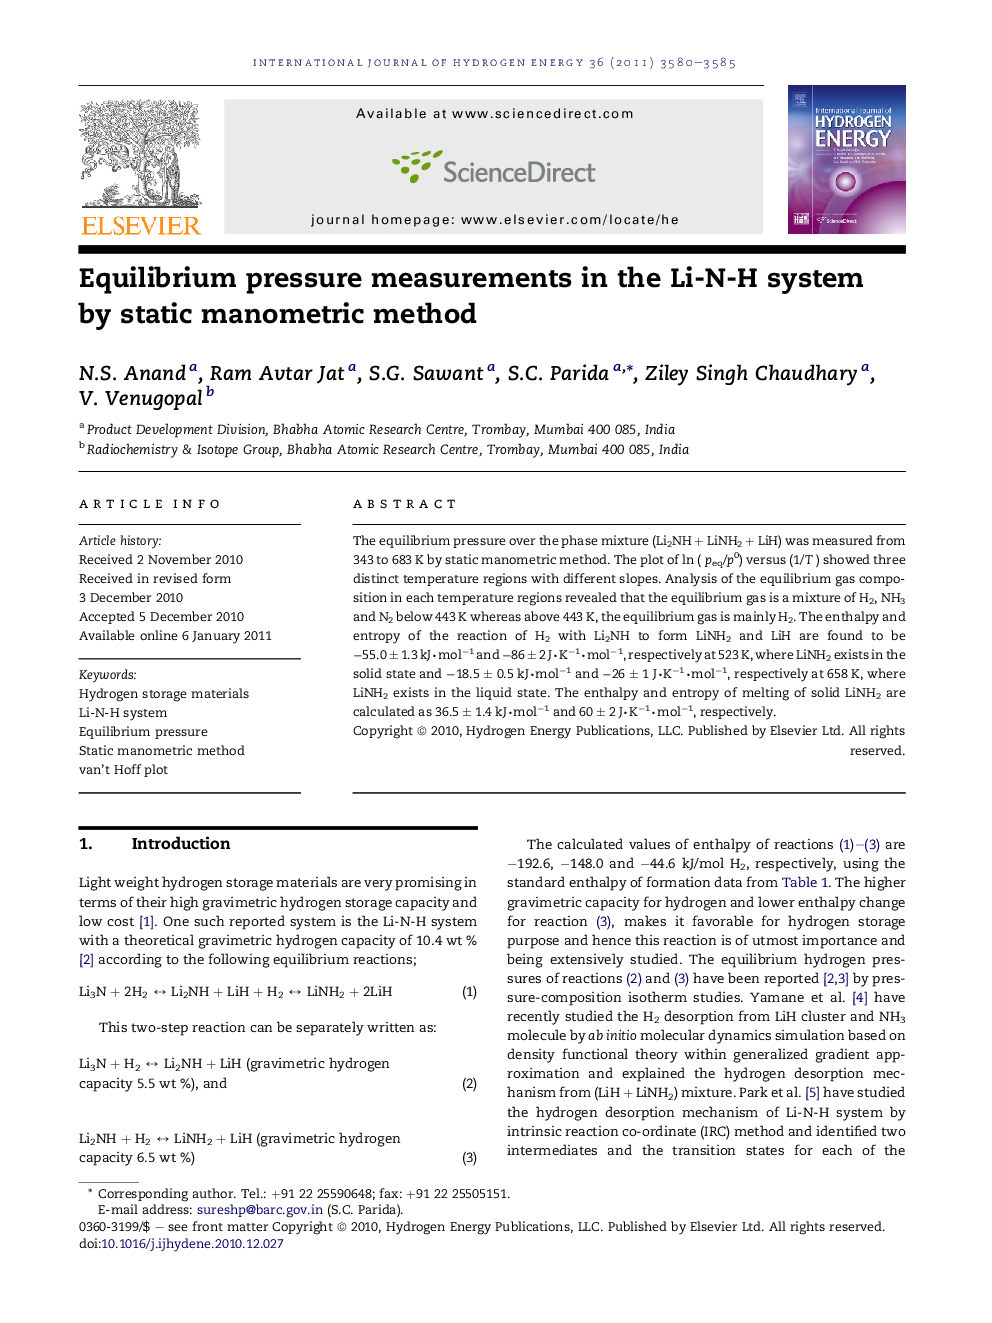 Equilibrium pressure measurements in the Li-N-H system by static manometric method